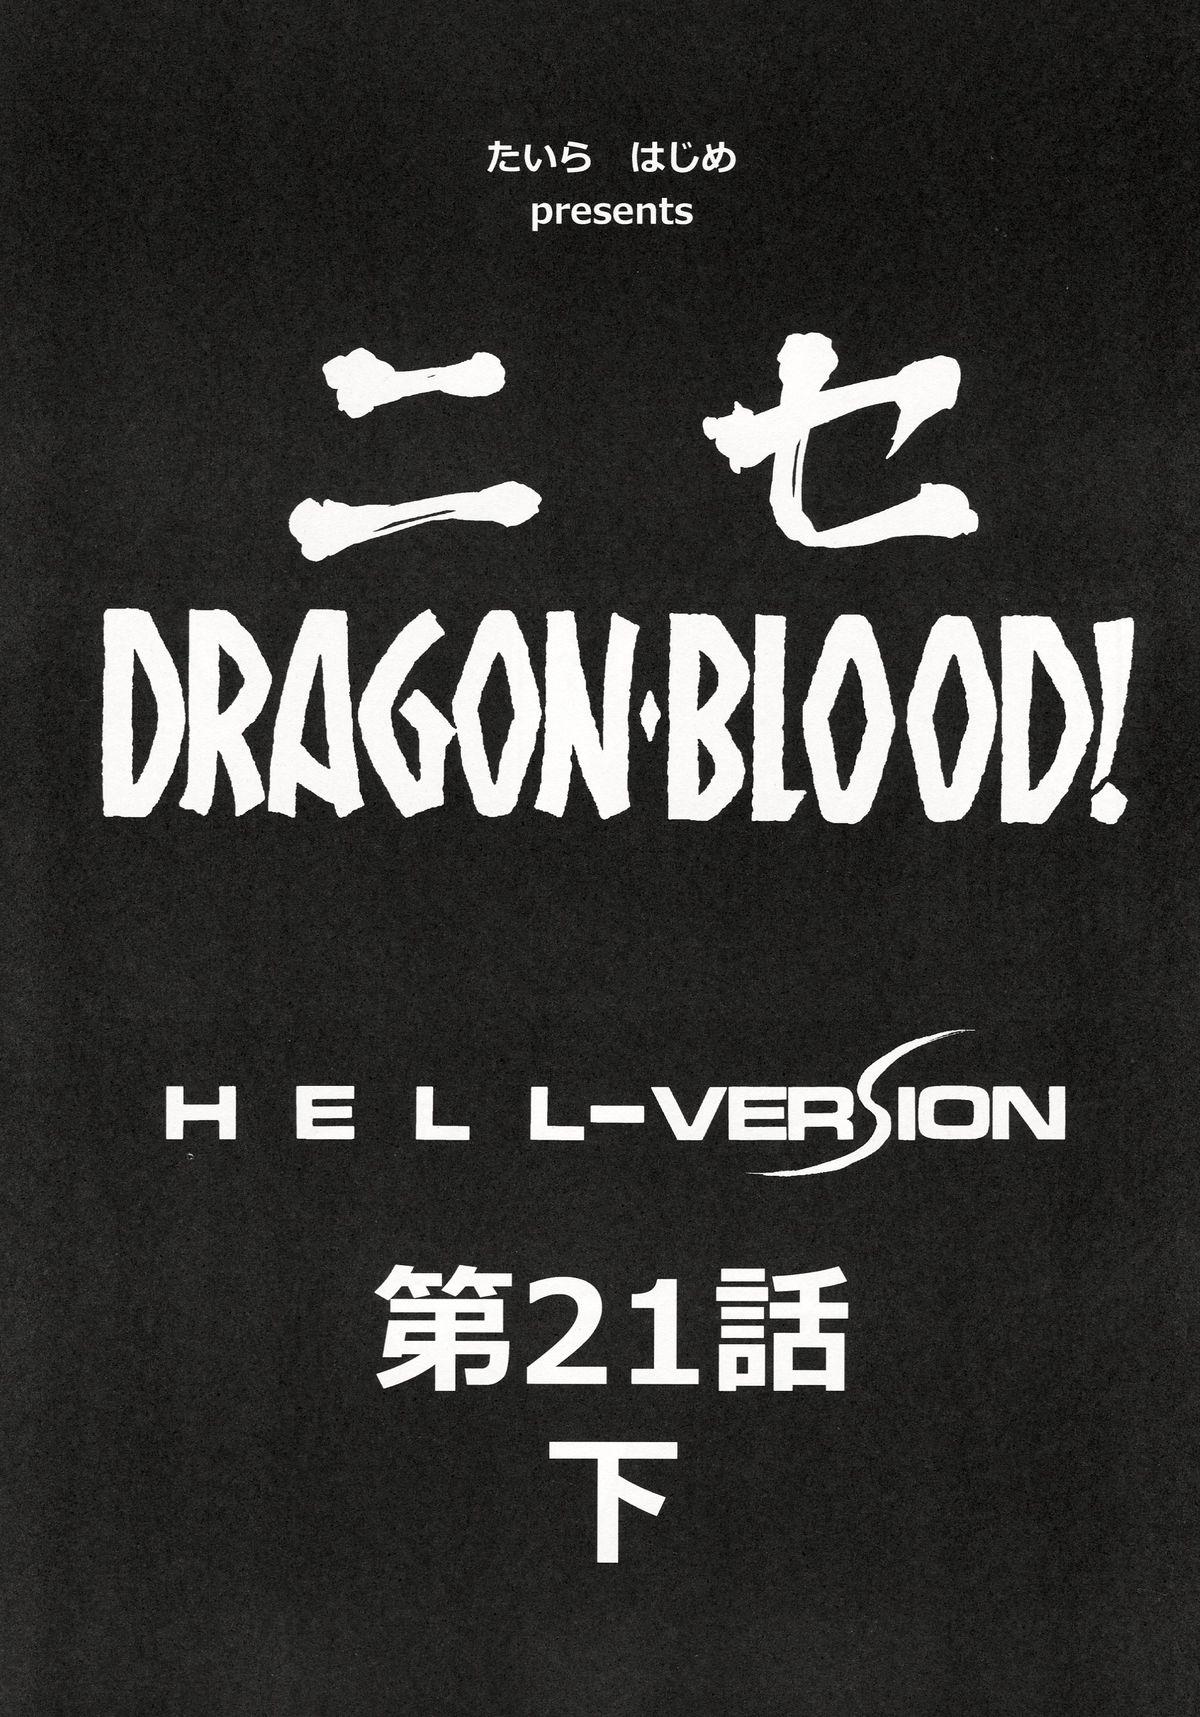 Nise Dragon Blood! 21.5 8